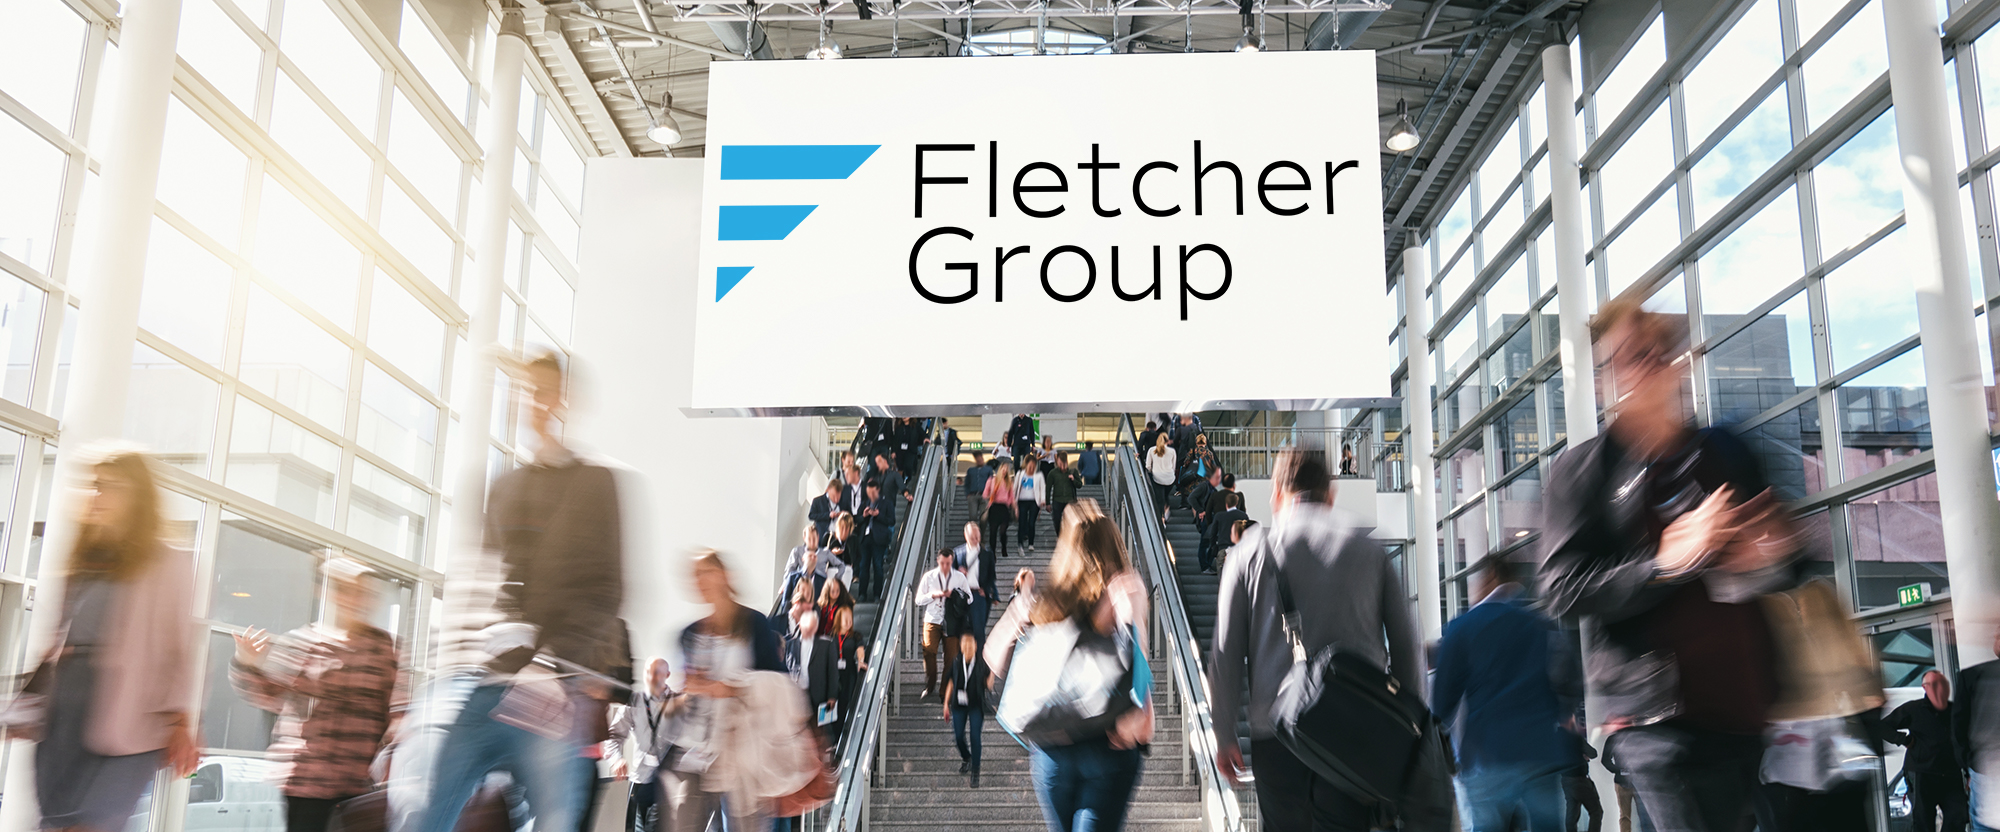 Fletcher Group